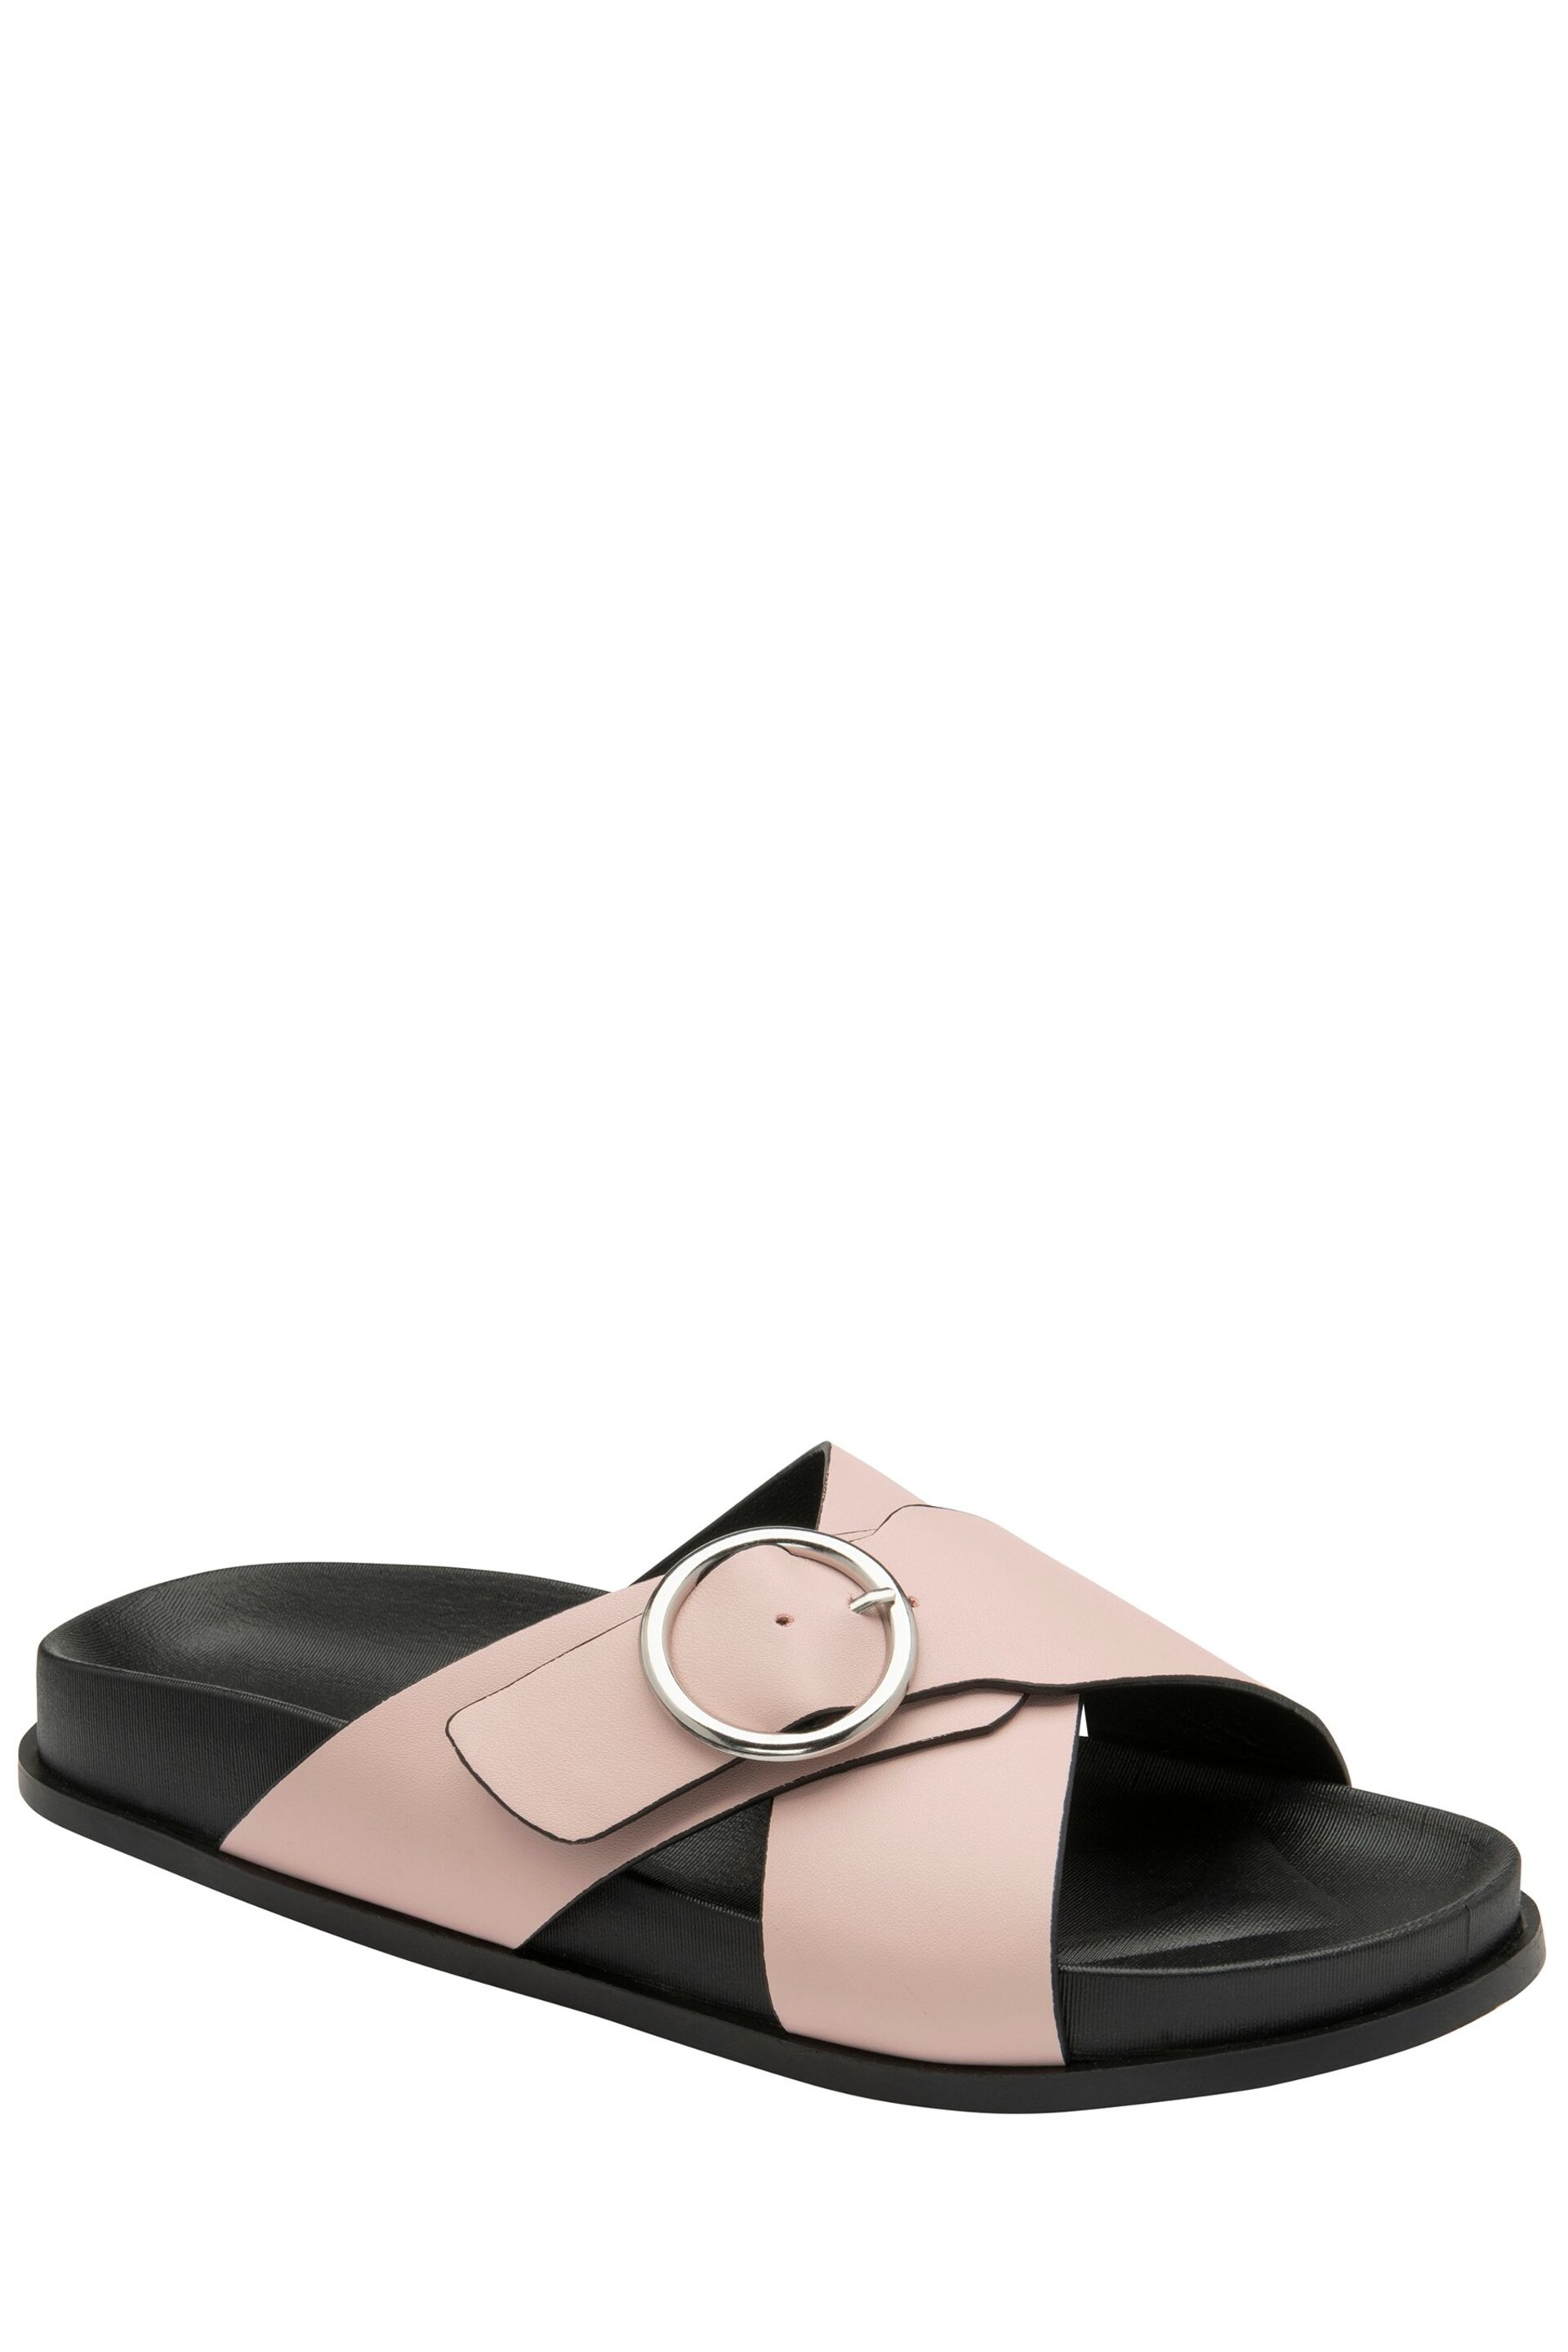 Dunlop Pink Open-Toe Mule Sandals - Image 1 of 4